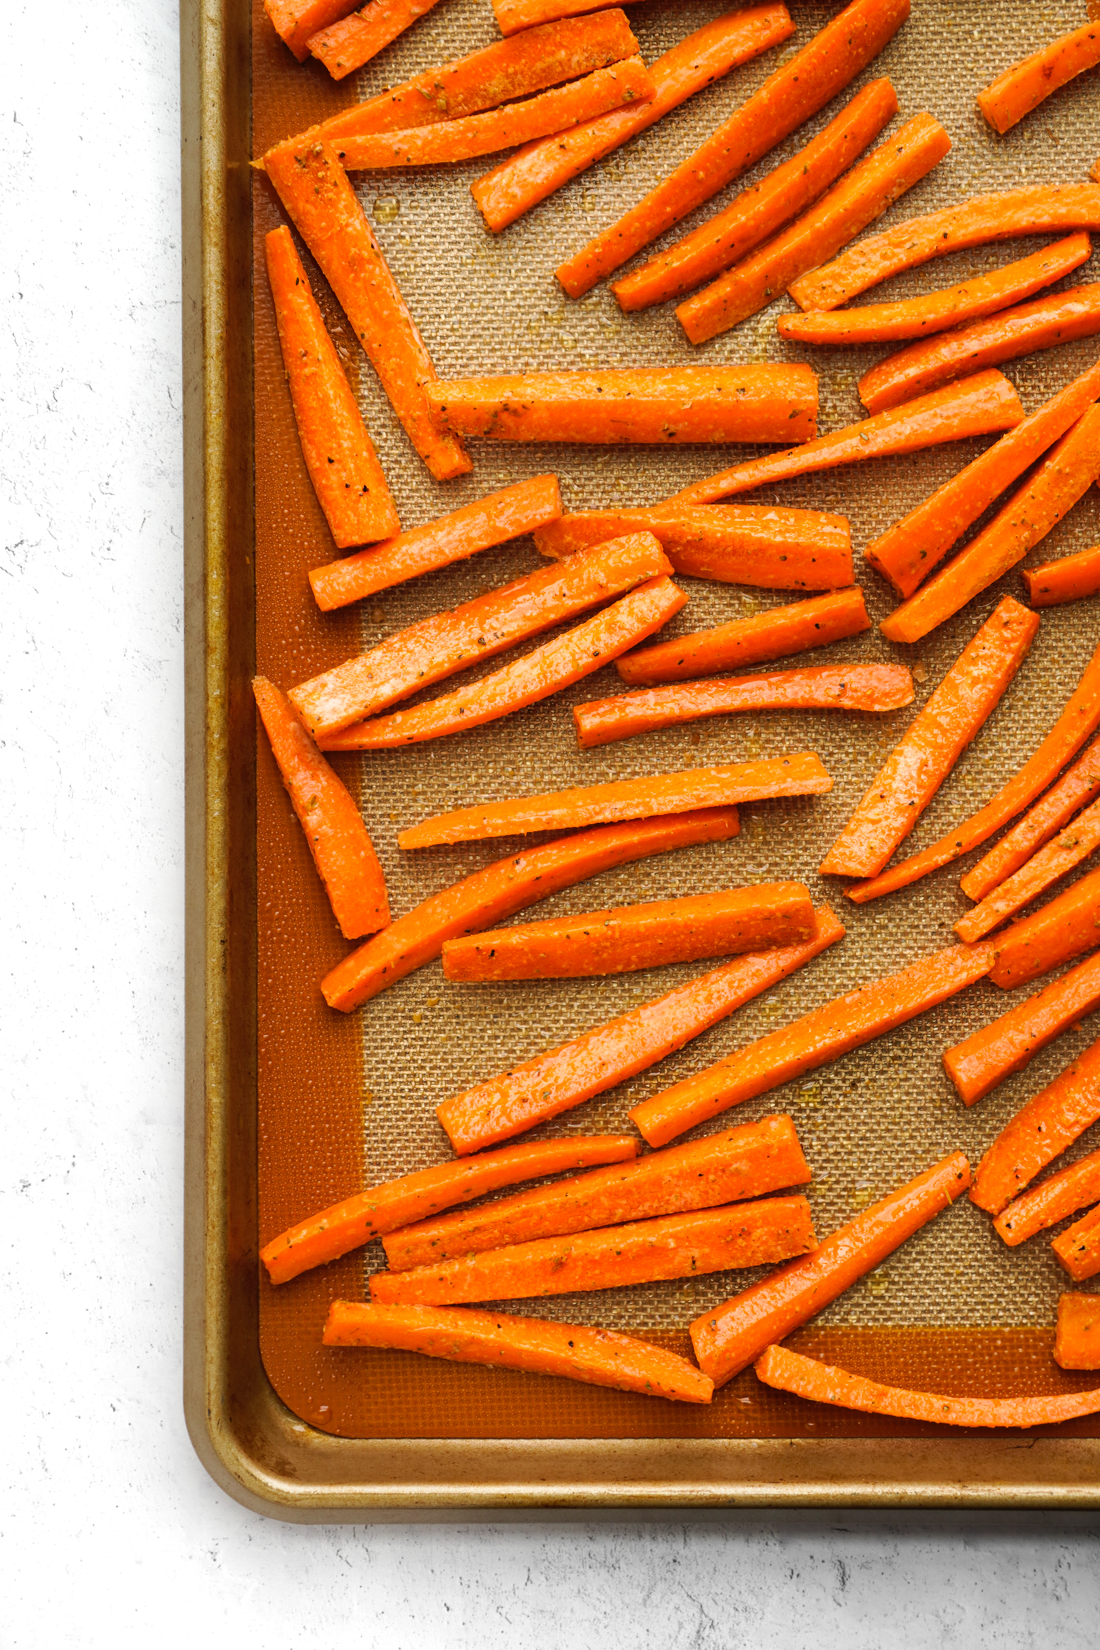 carrots on a baking sheet